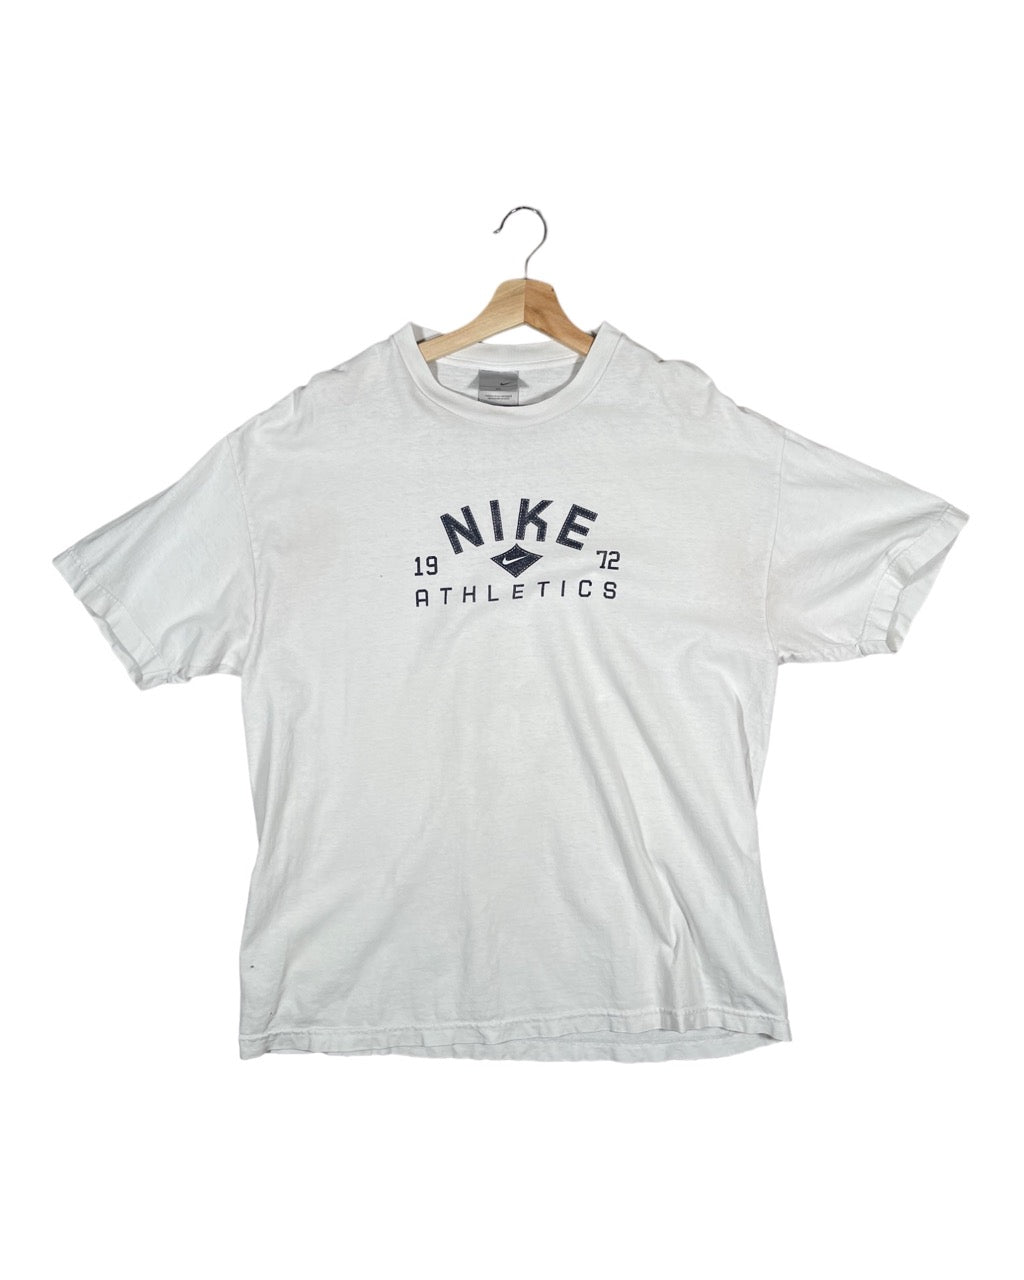 Vintage 2000's Nike Athletics 1972 T-Shirt